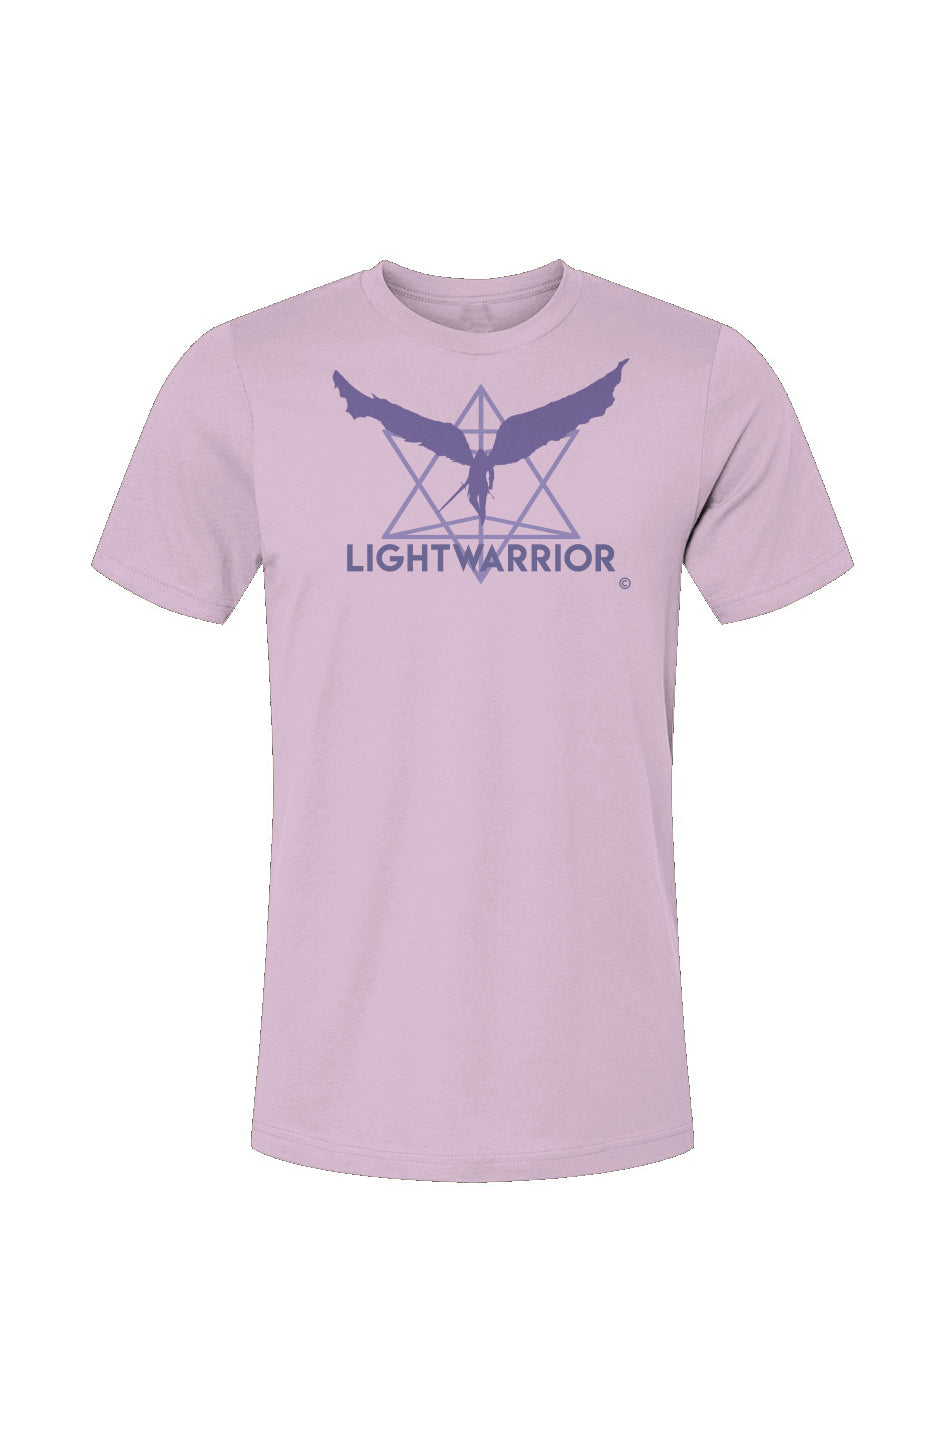 the lightwarrior collection: monochromatic unisex